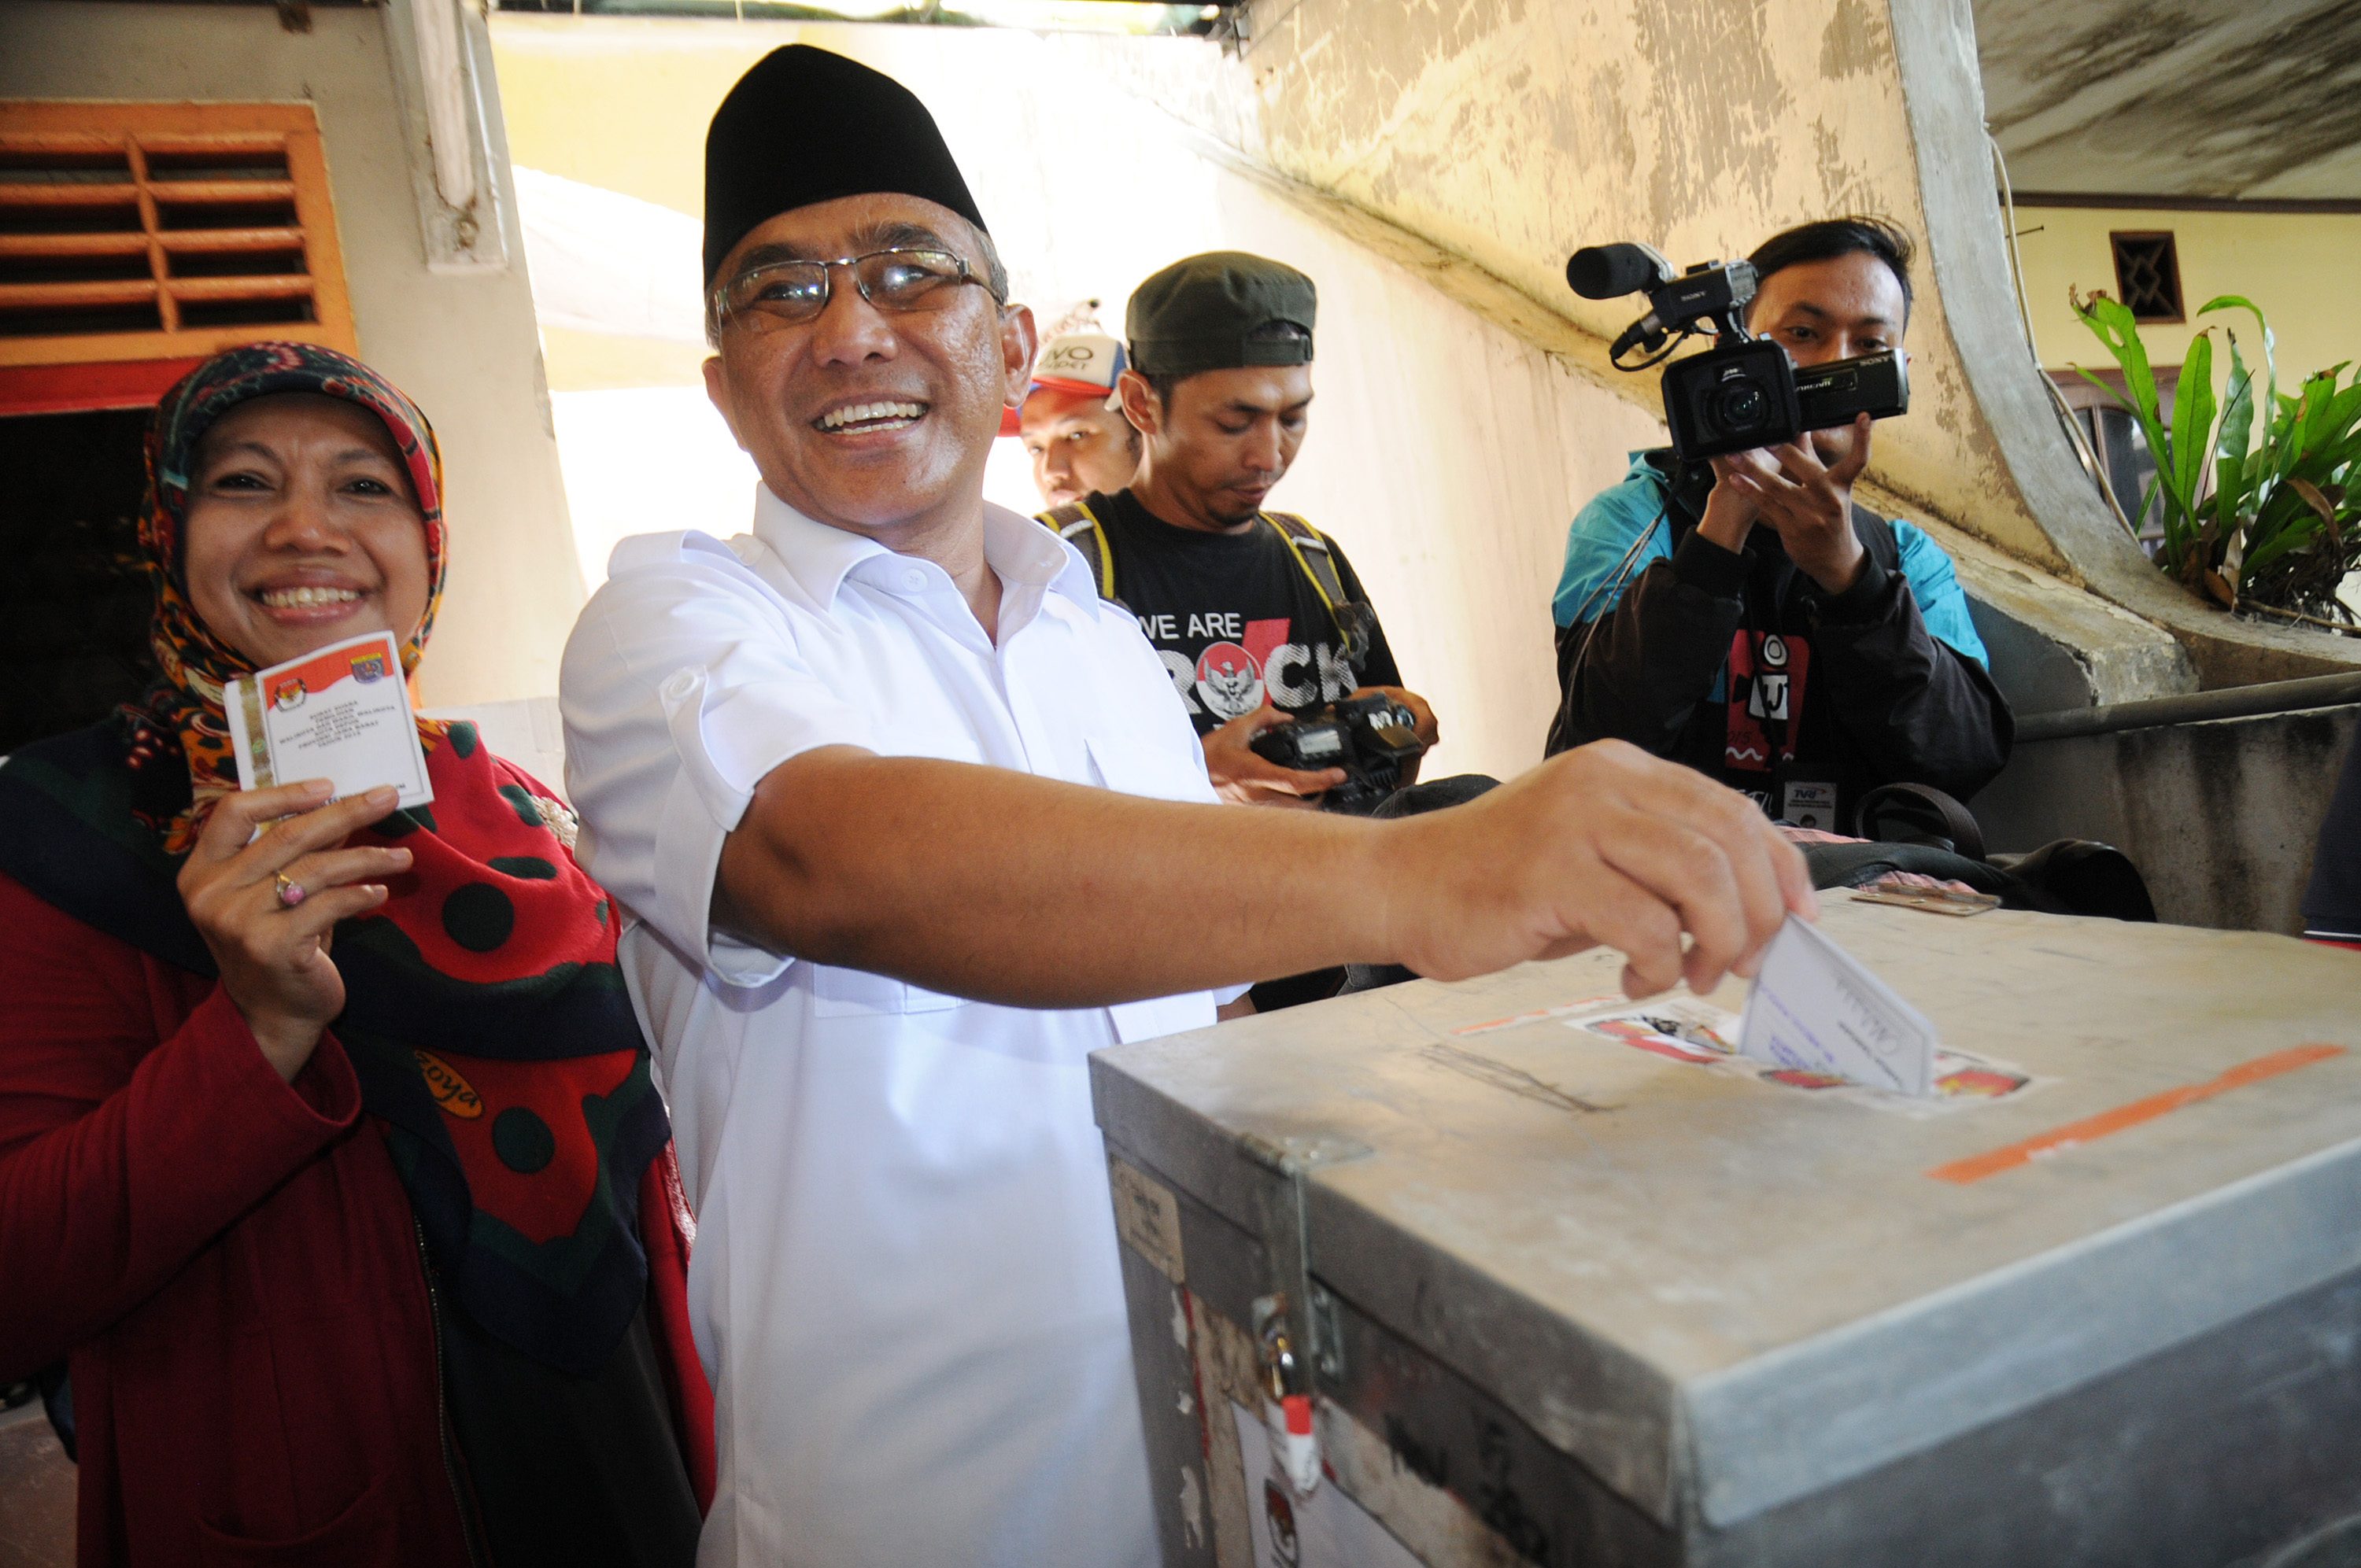 Calon Wali Kota Depok Idris Abdul Somad memasukkan surat suara saat menggunakan hak pilih di TPS 77, Pondok Duta, Baktijaya, Depok, Jawa Barat, 9 Desember 2015. Foto oleh Indrianto Eko Suwarso/Antara 